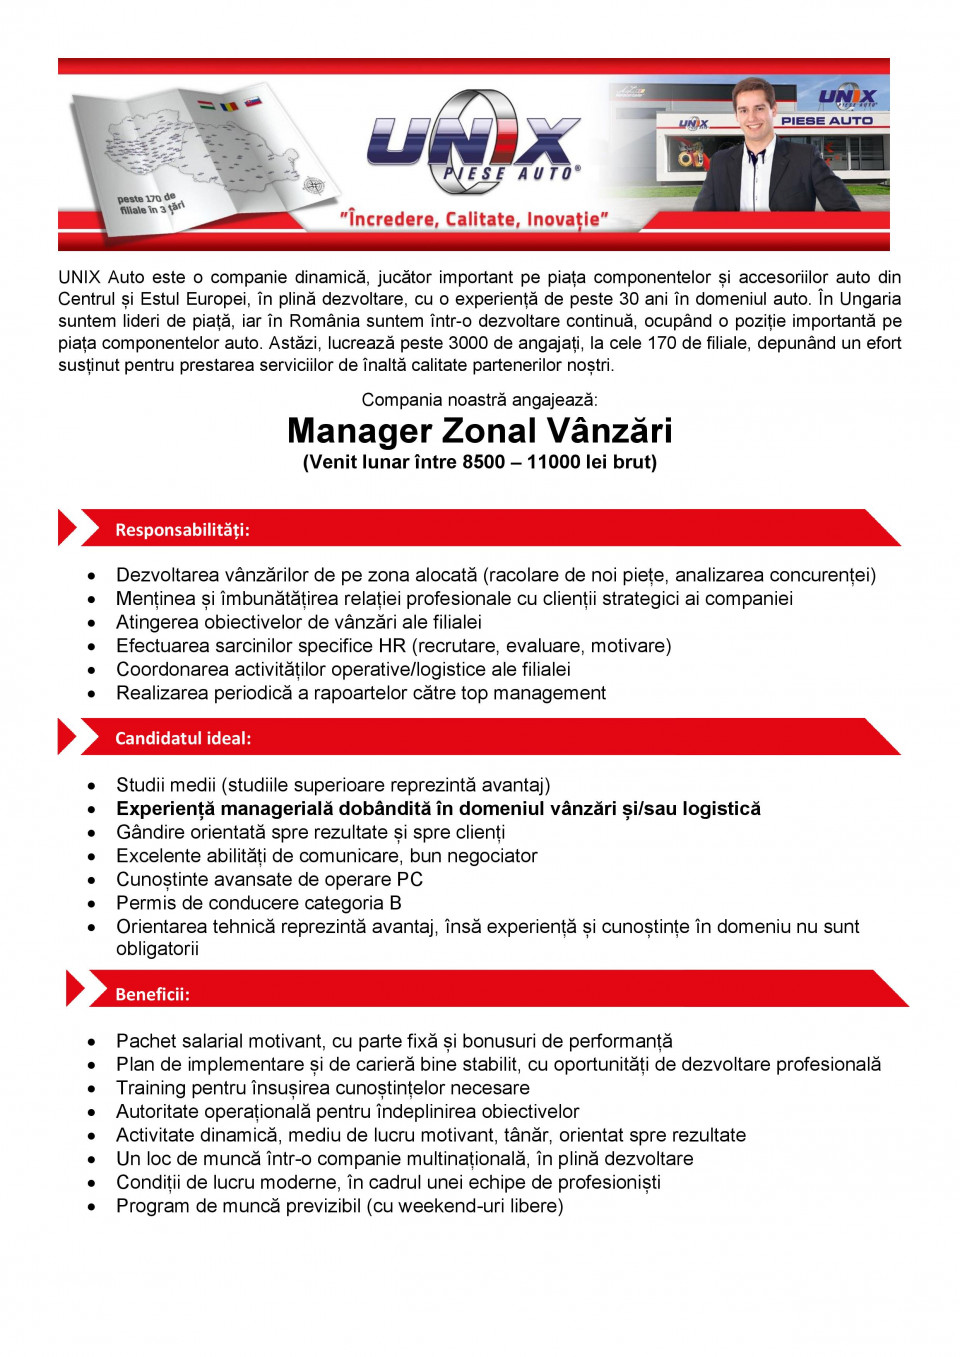 Manager Zonal Vanzari (venit lunar 8500 – 11000 Ron brut)